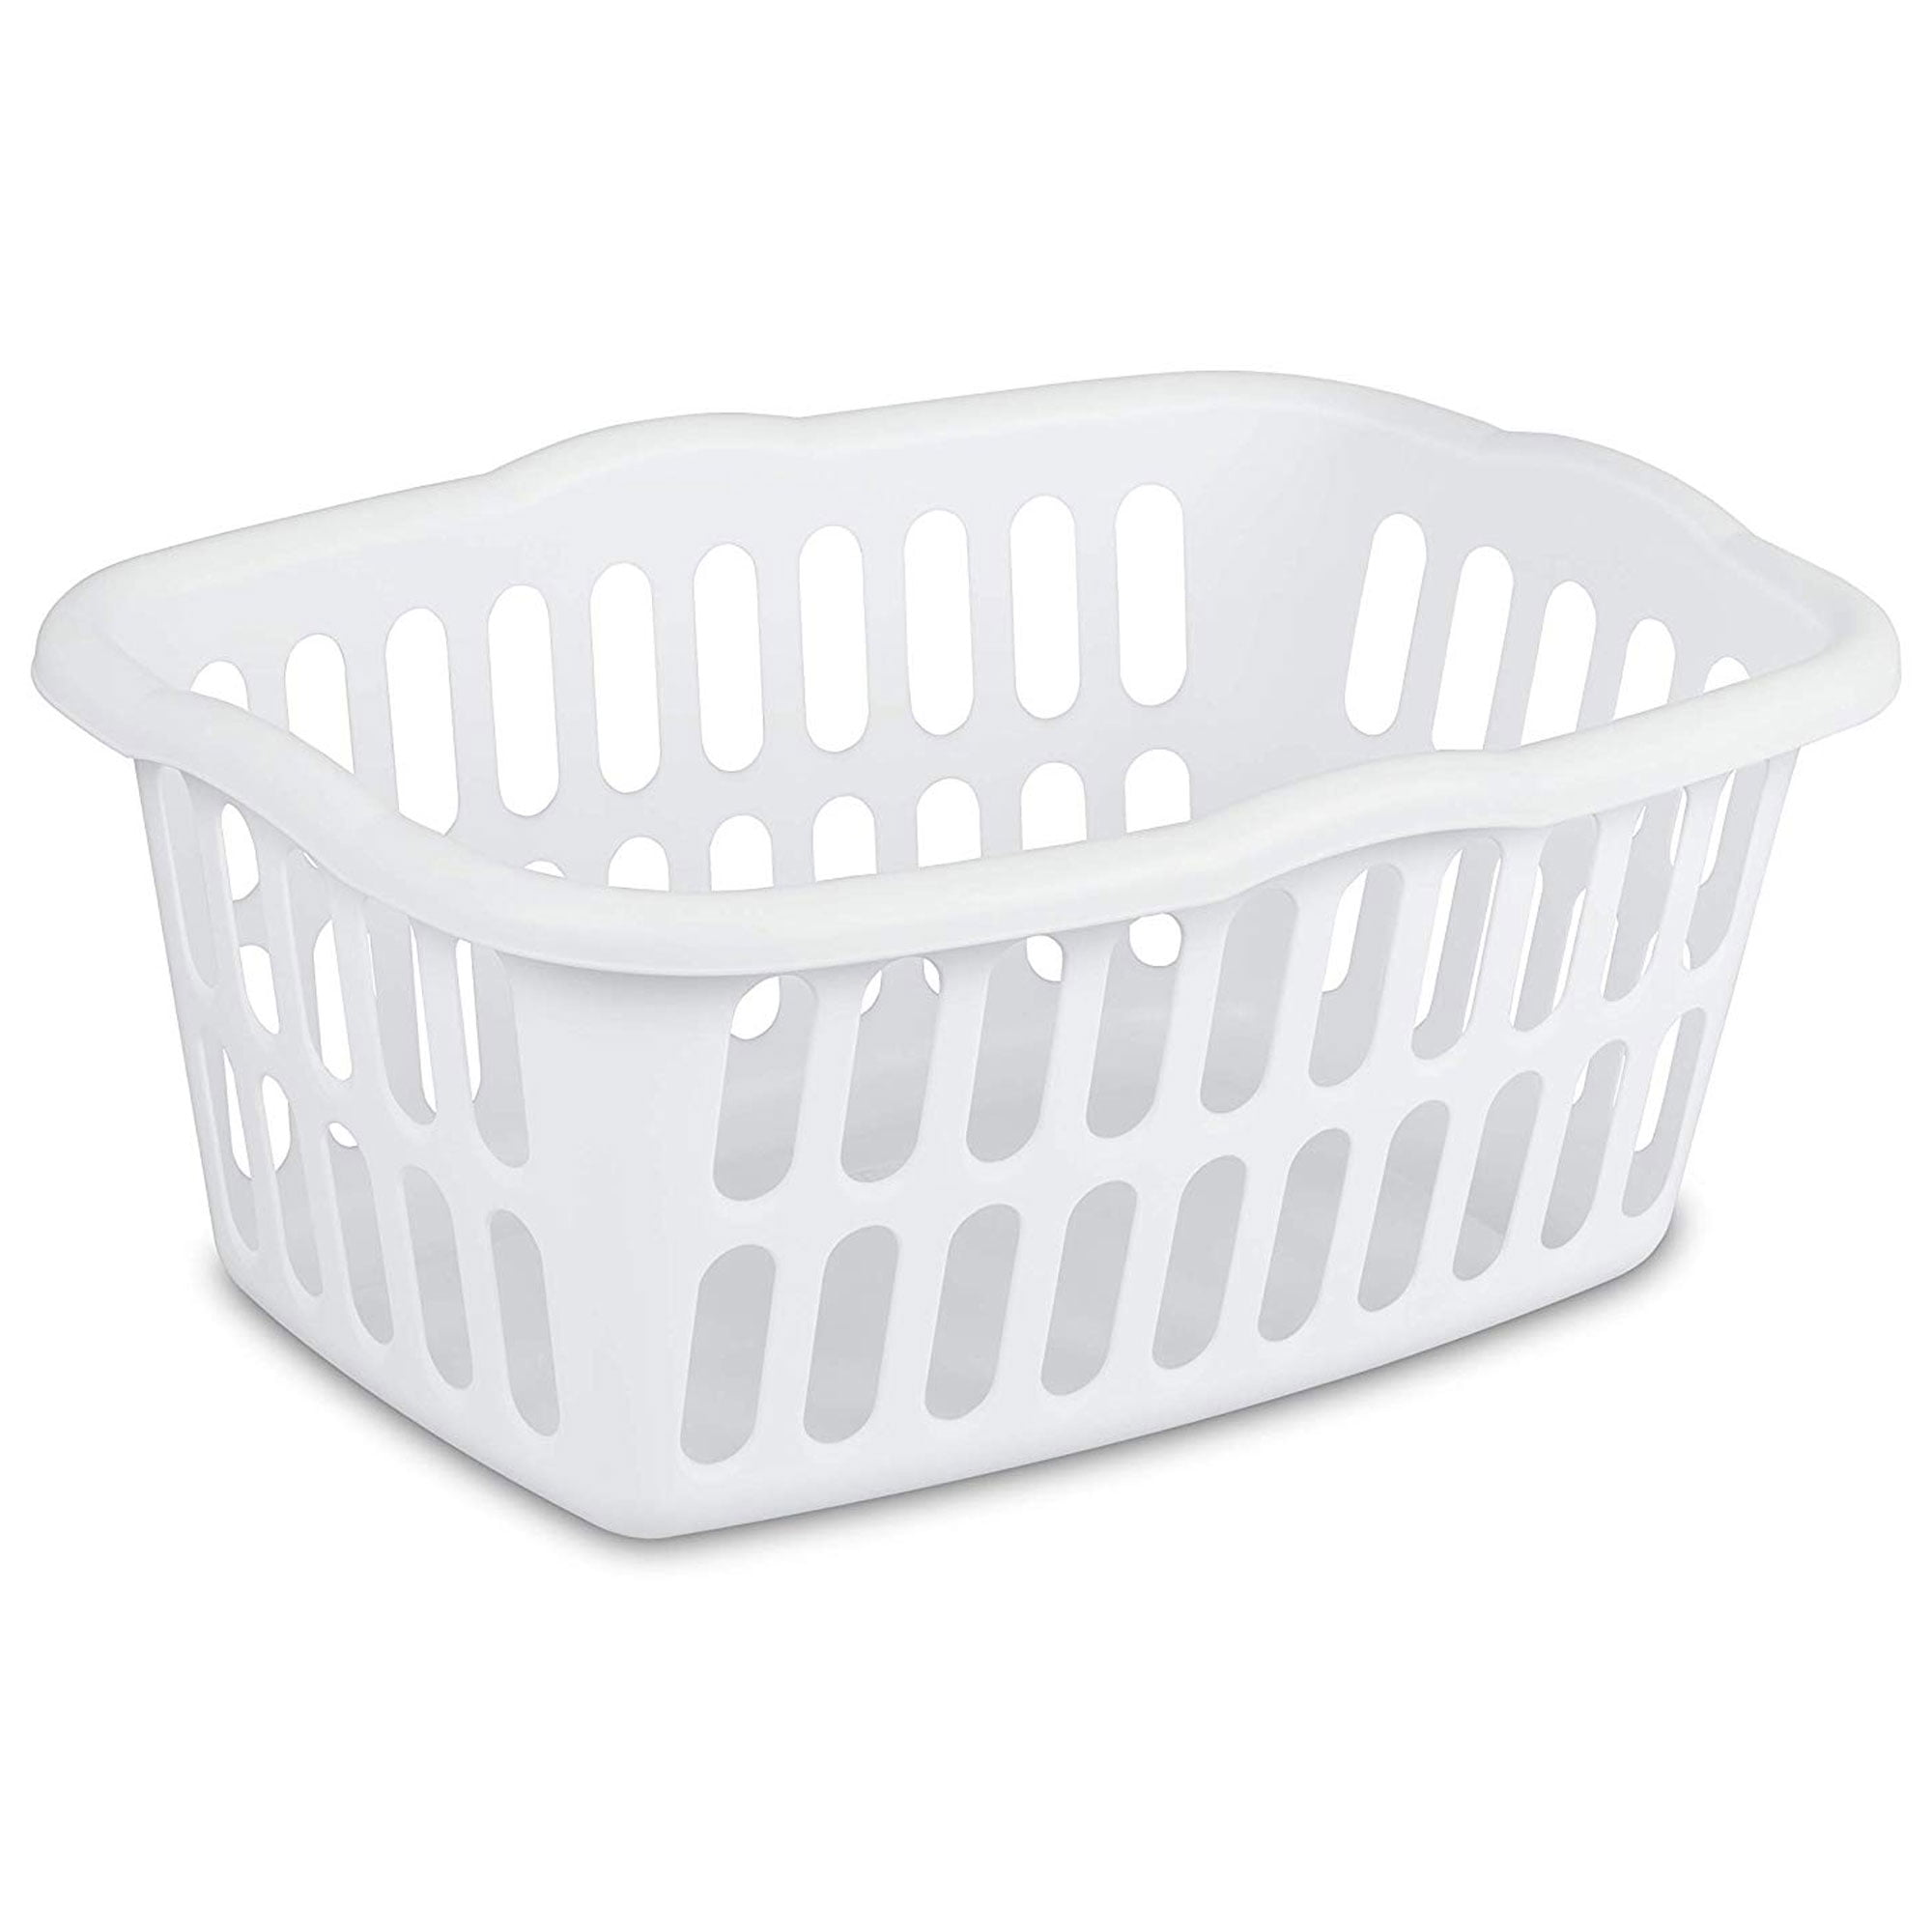 Laundry Basket 01. 1:24 Scale (D37ZAAYLJ) by pinelas